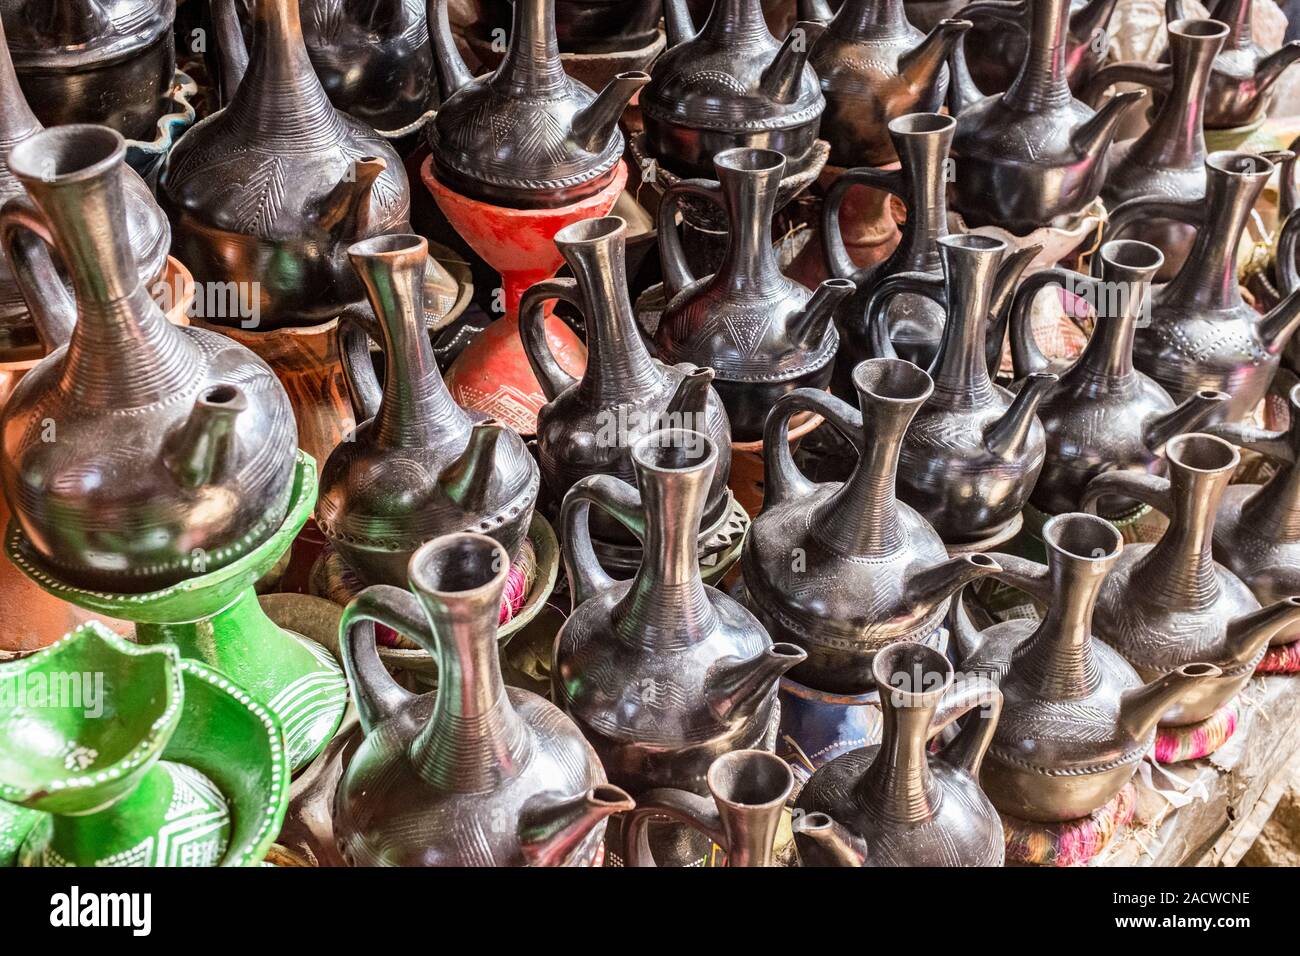 Ethiopian coffee pots (Jebena) for sale in Shola market in Addis Ababa, Ethiopia Stock Photo